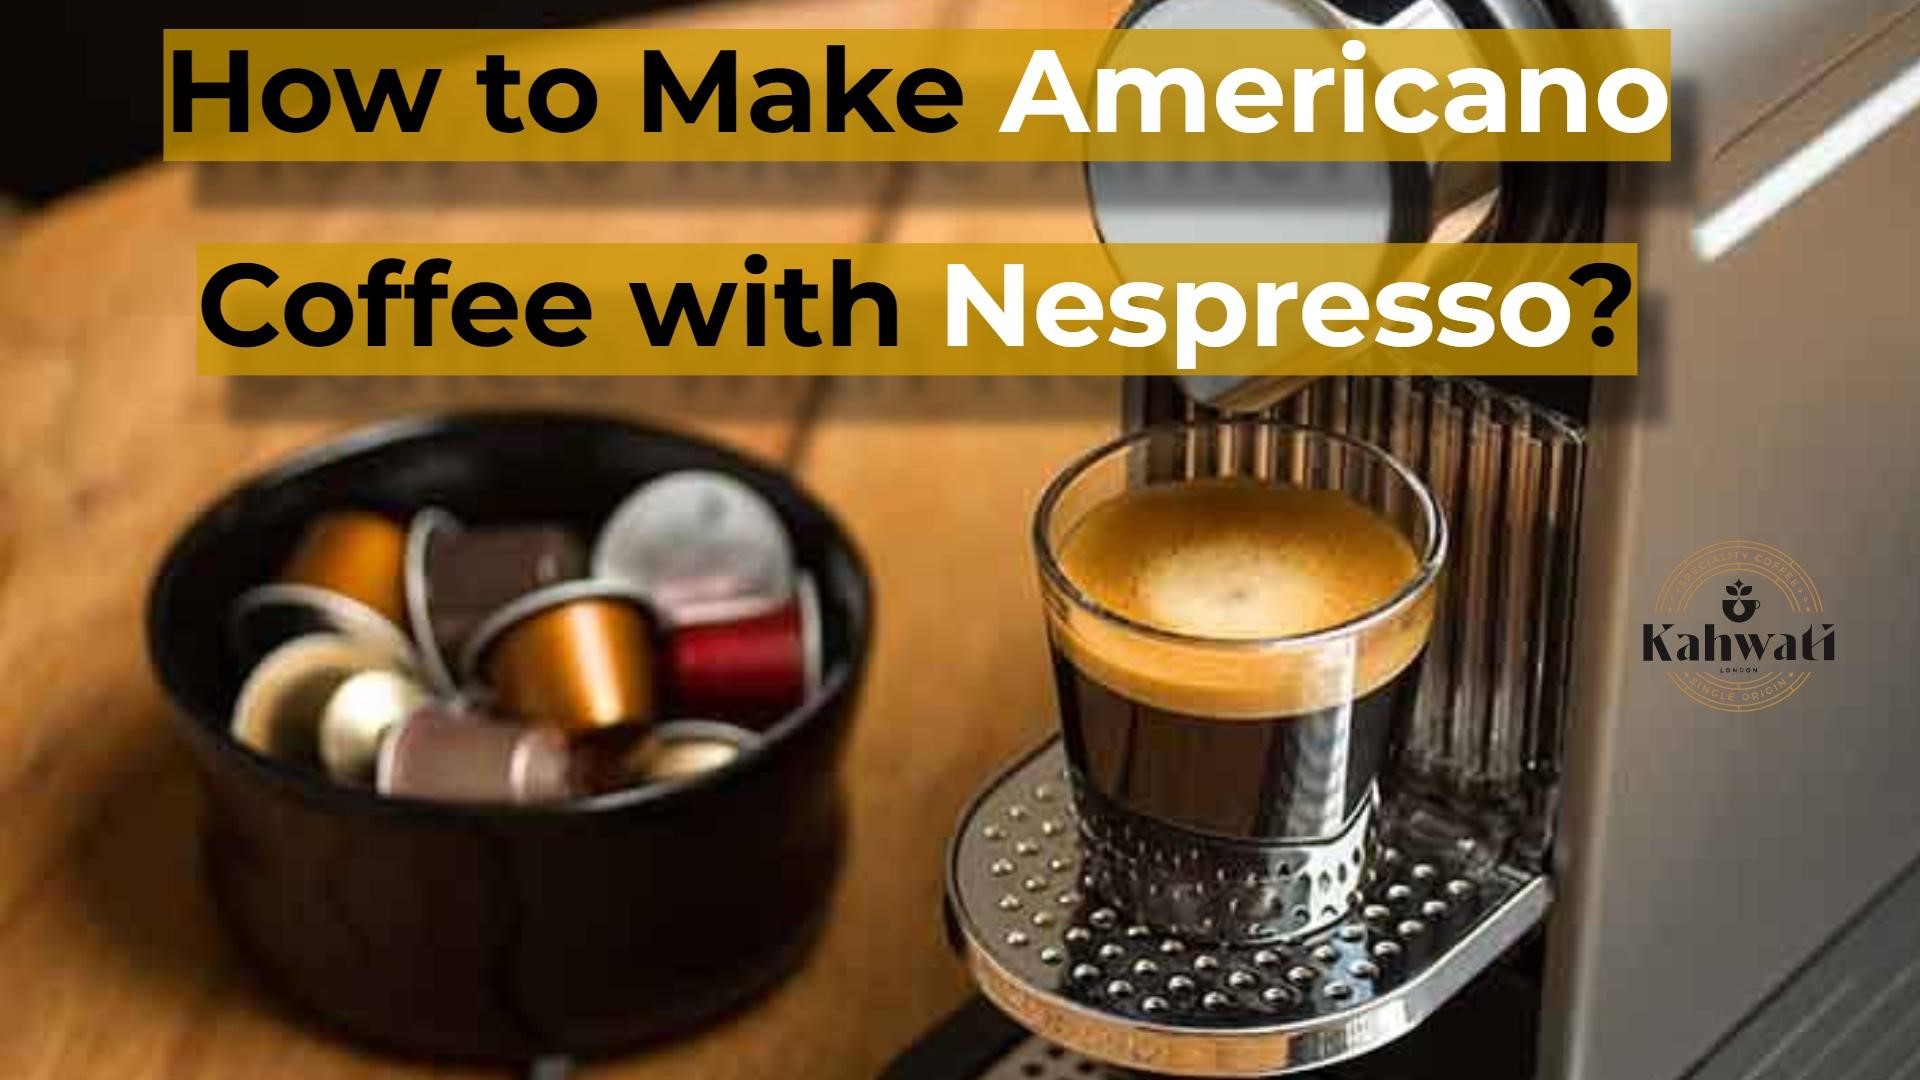 How to Make Americano Coffee with Nespresso